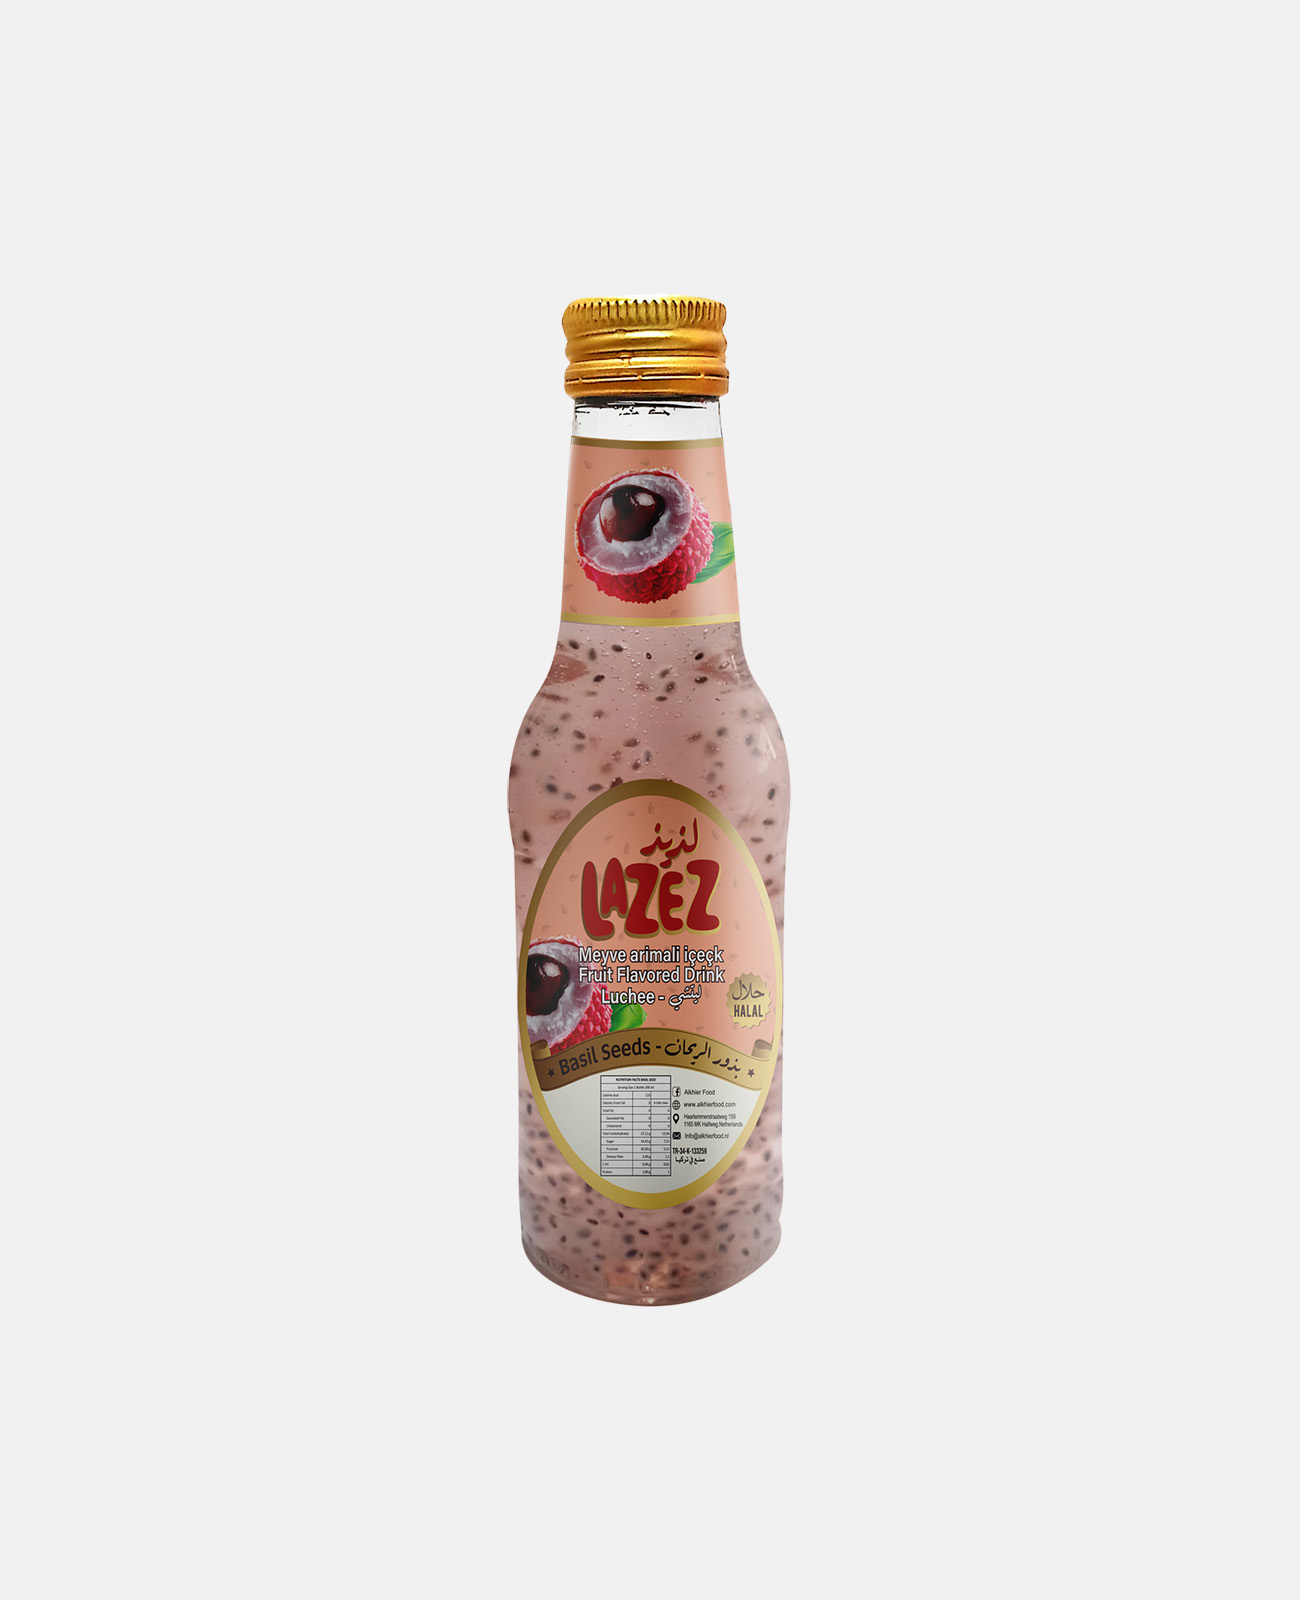 Lazez Basil Seeds Drink - Fruit Flavoured/Lychee